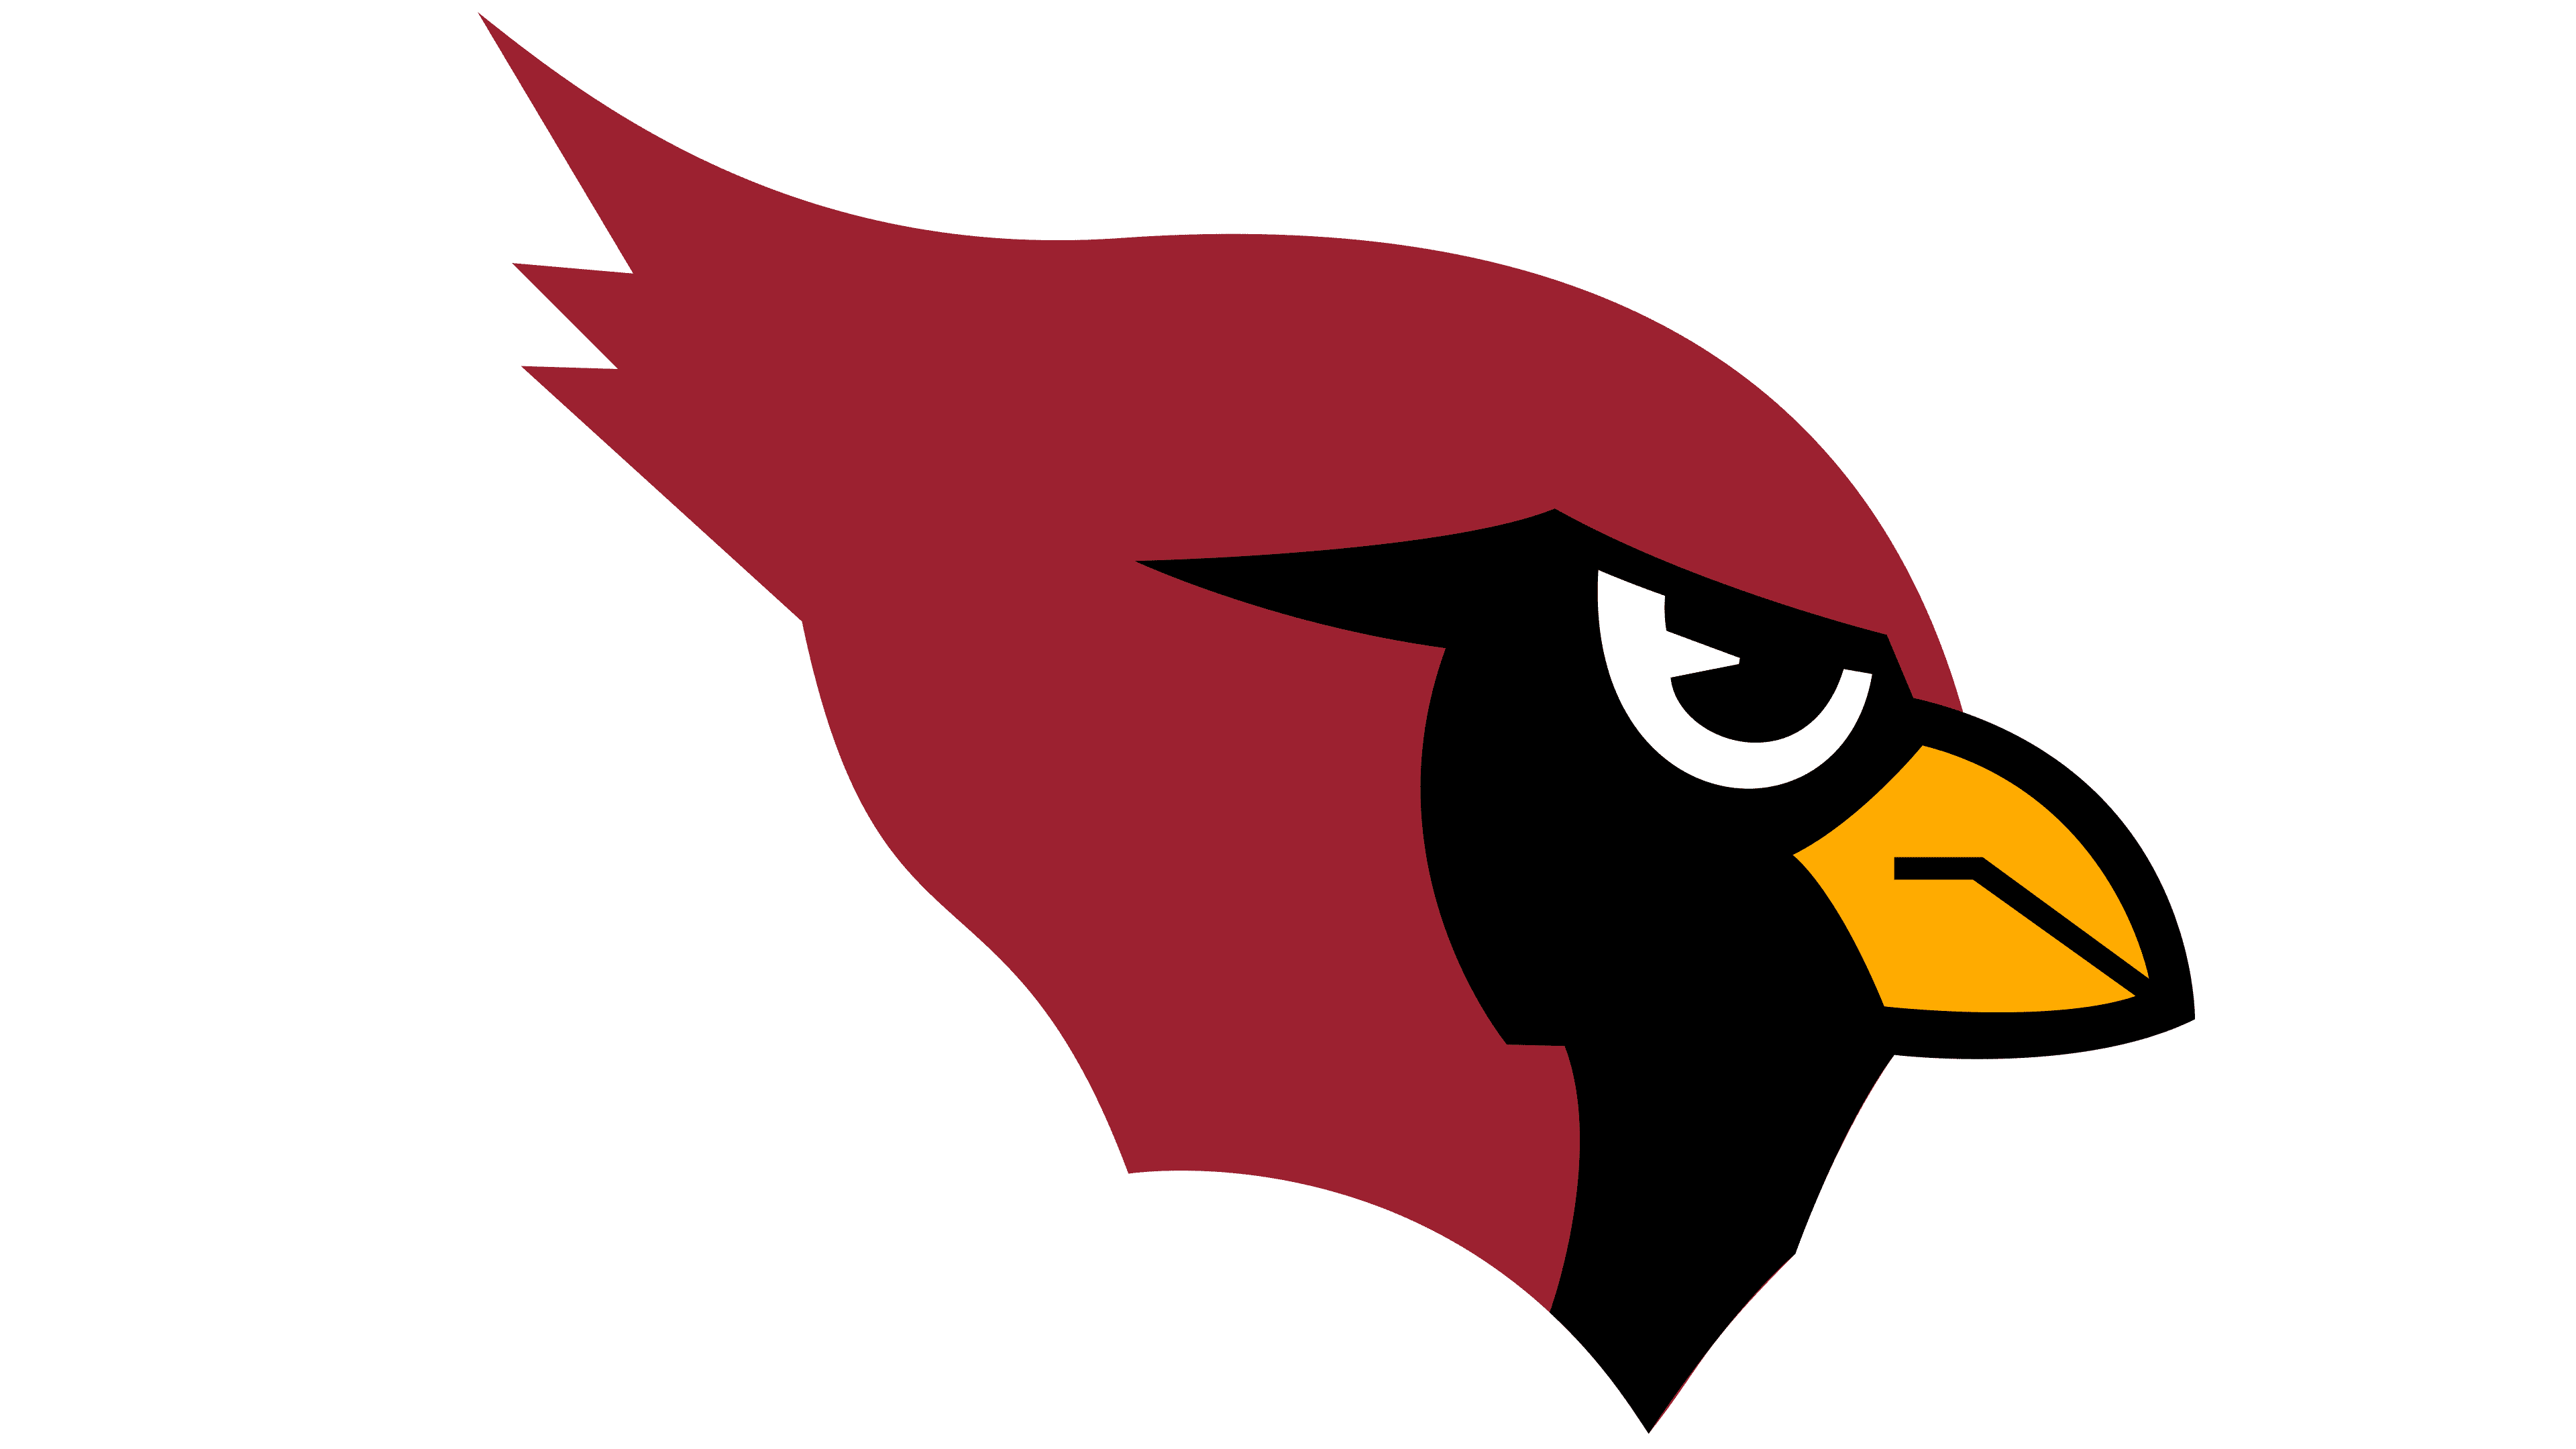 Arizona Cardinals Logo, symbol, meaning, history, PNG, brand